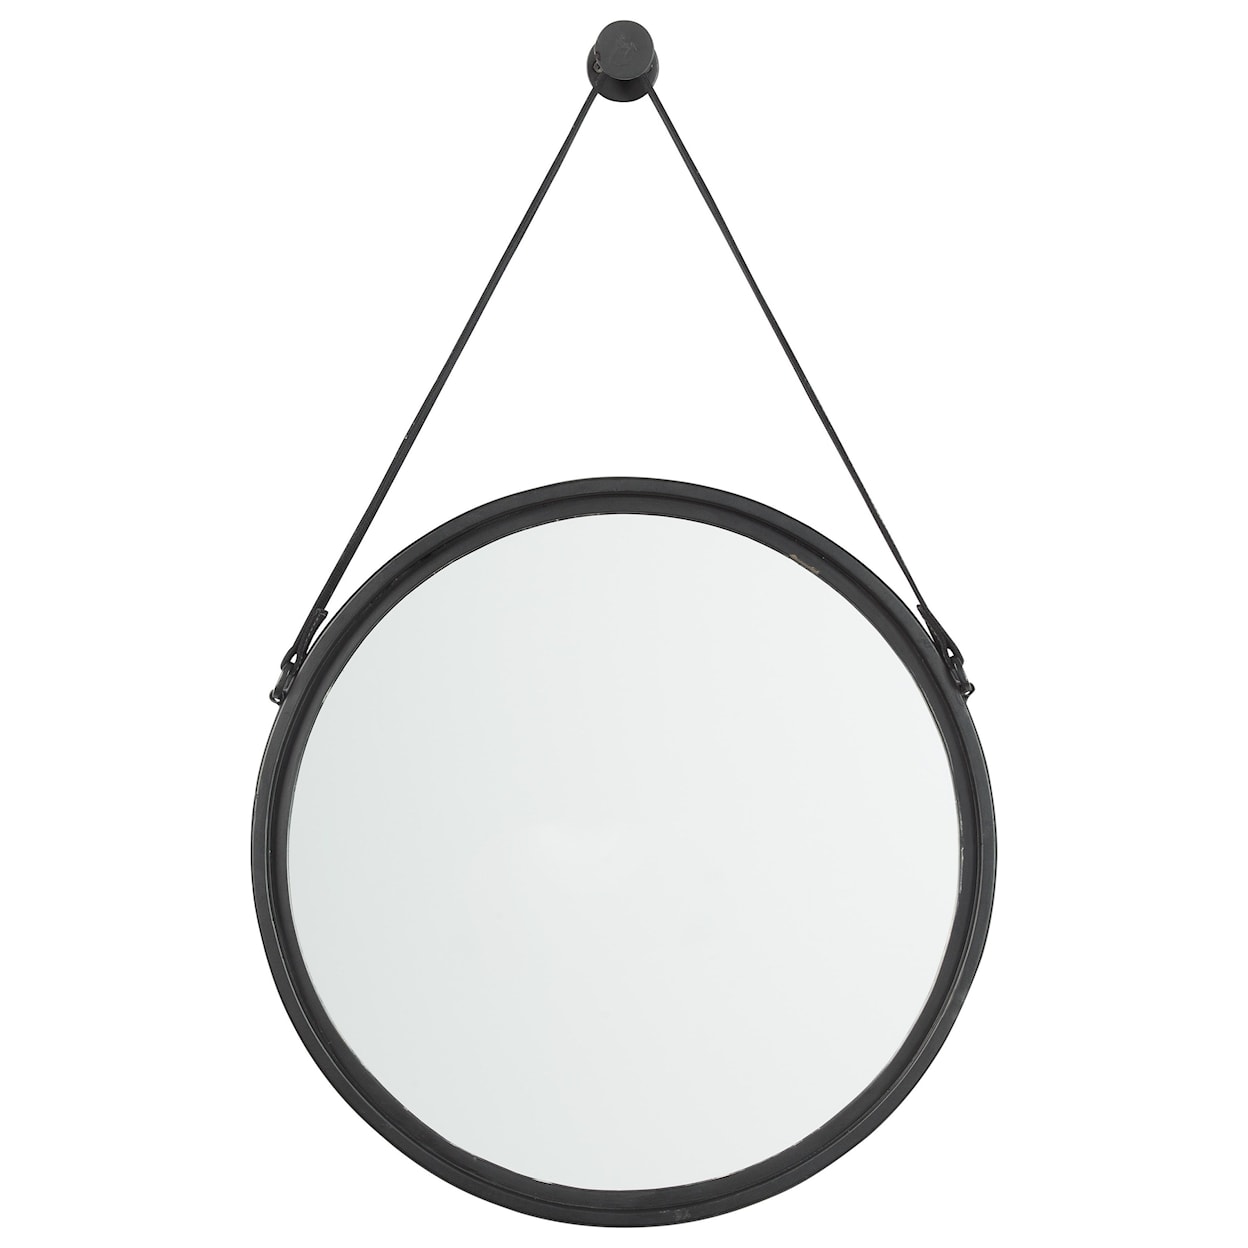 Ashley Signature Design Accent Mirrors Dusan Black Accent Mirror